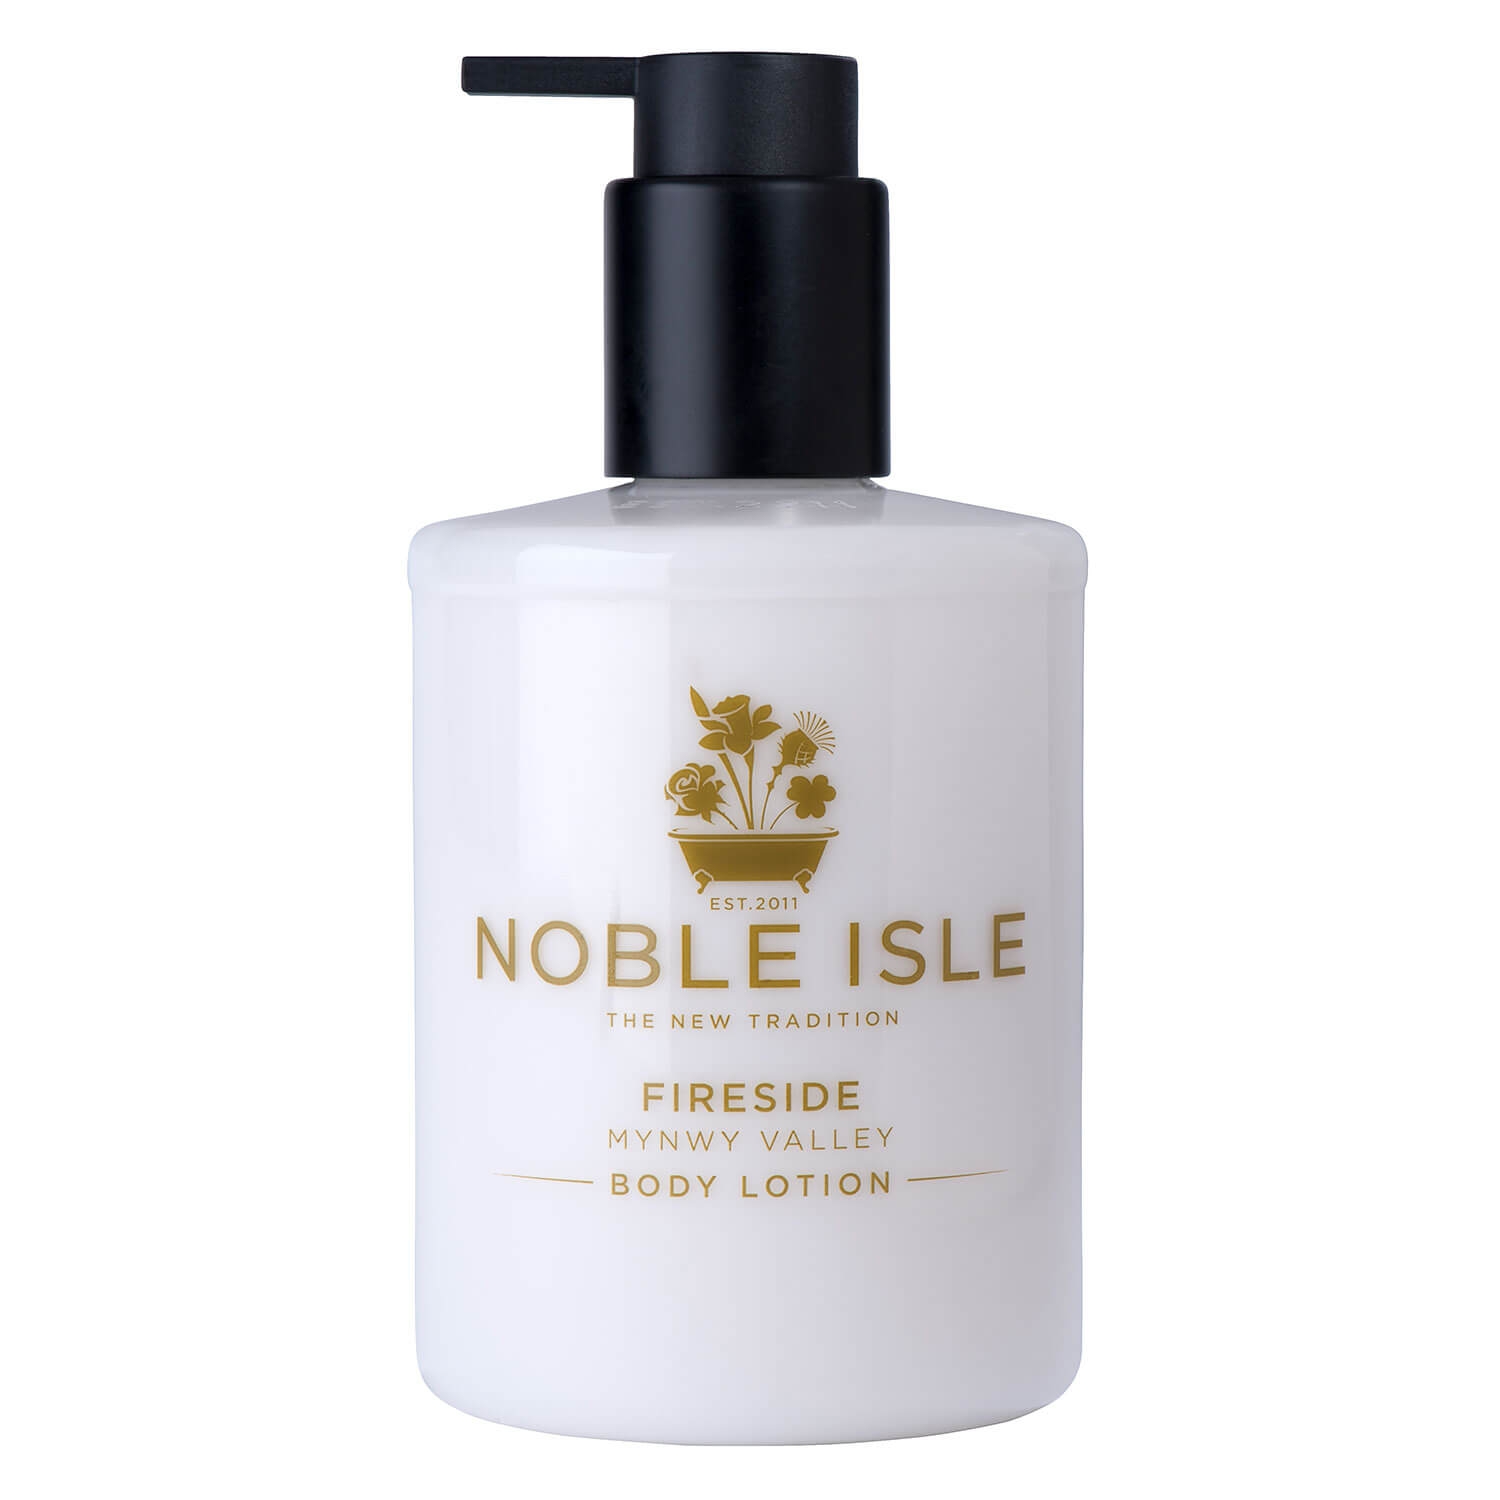 Produktbild von Noble Isle - Fireside Body Lotion